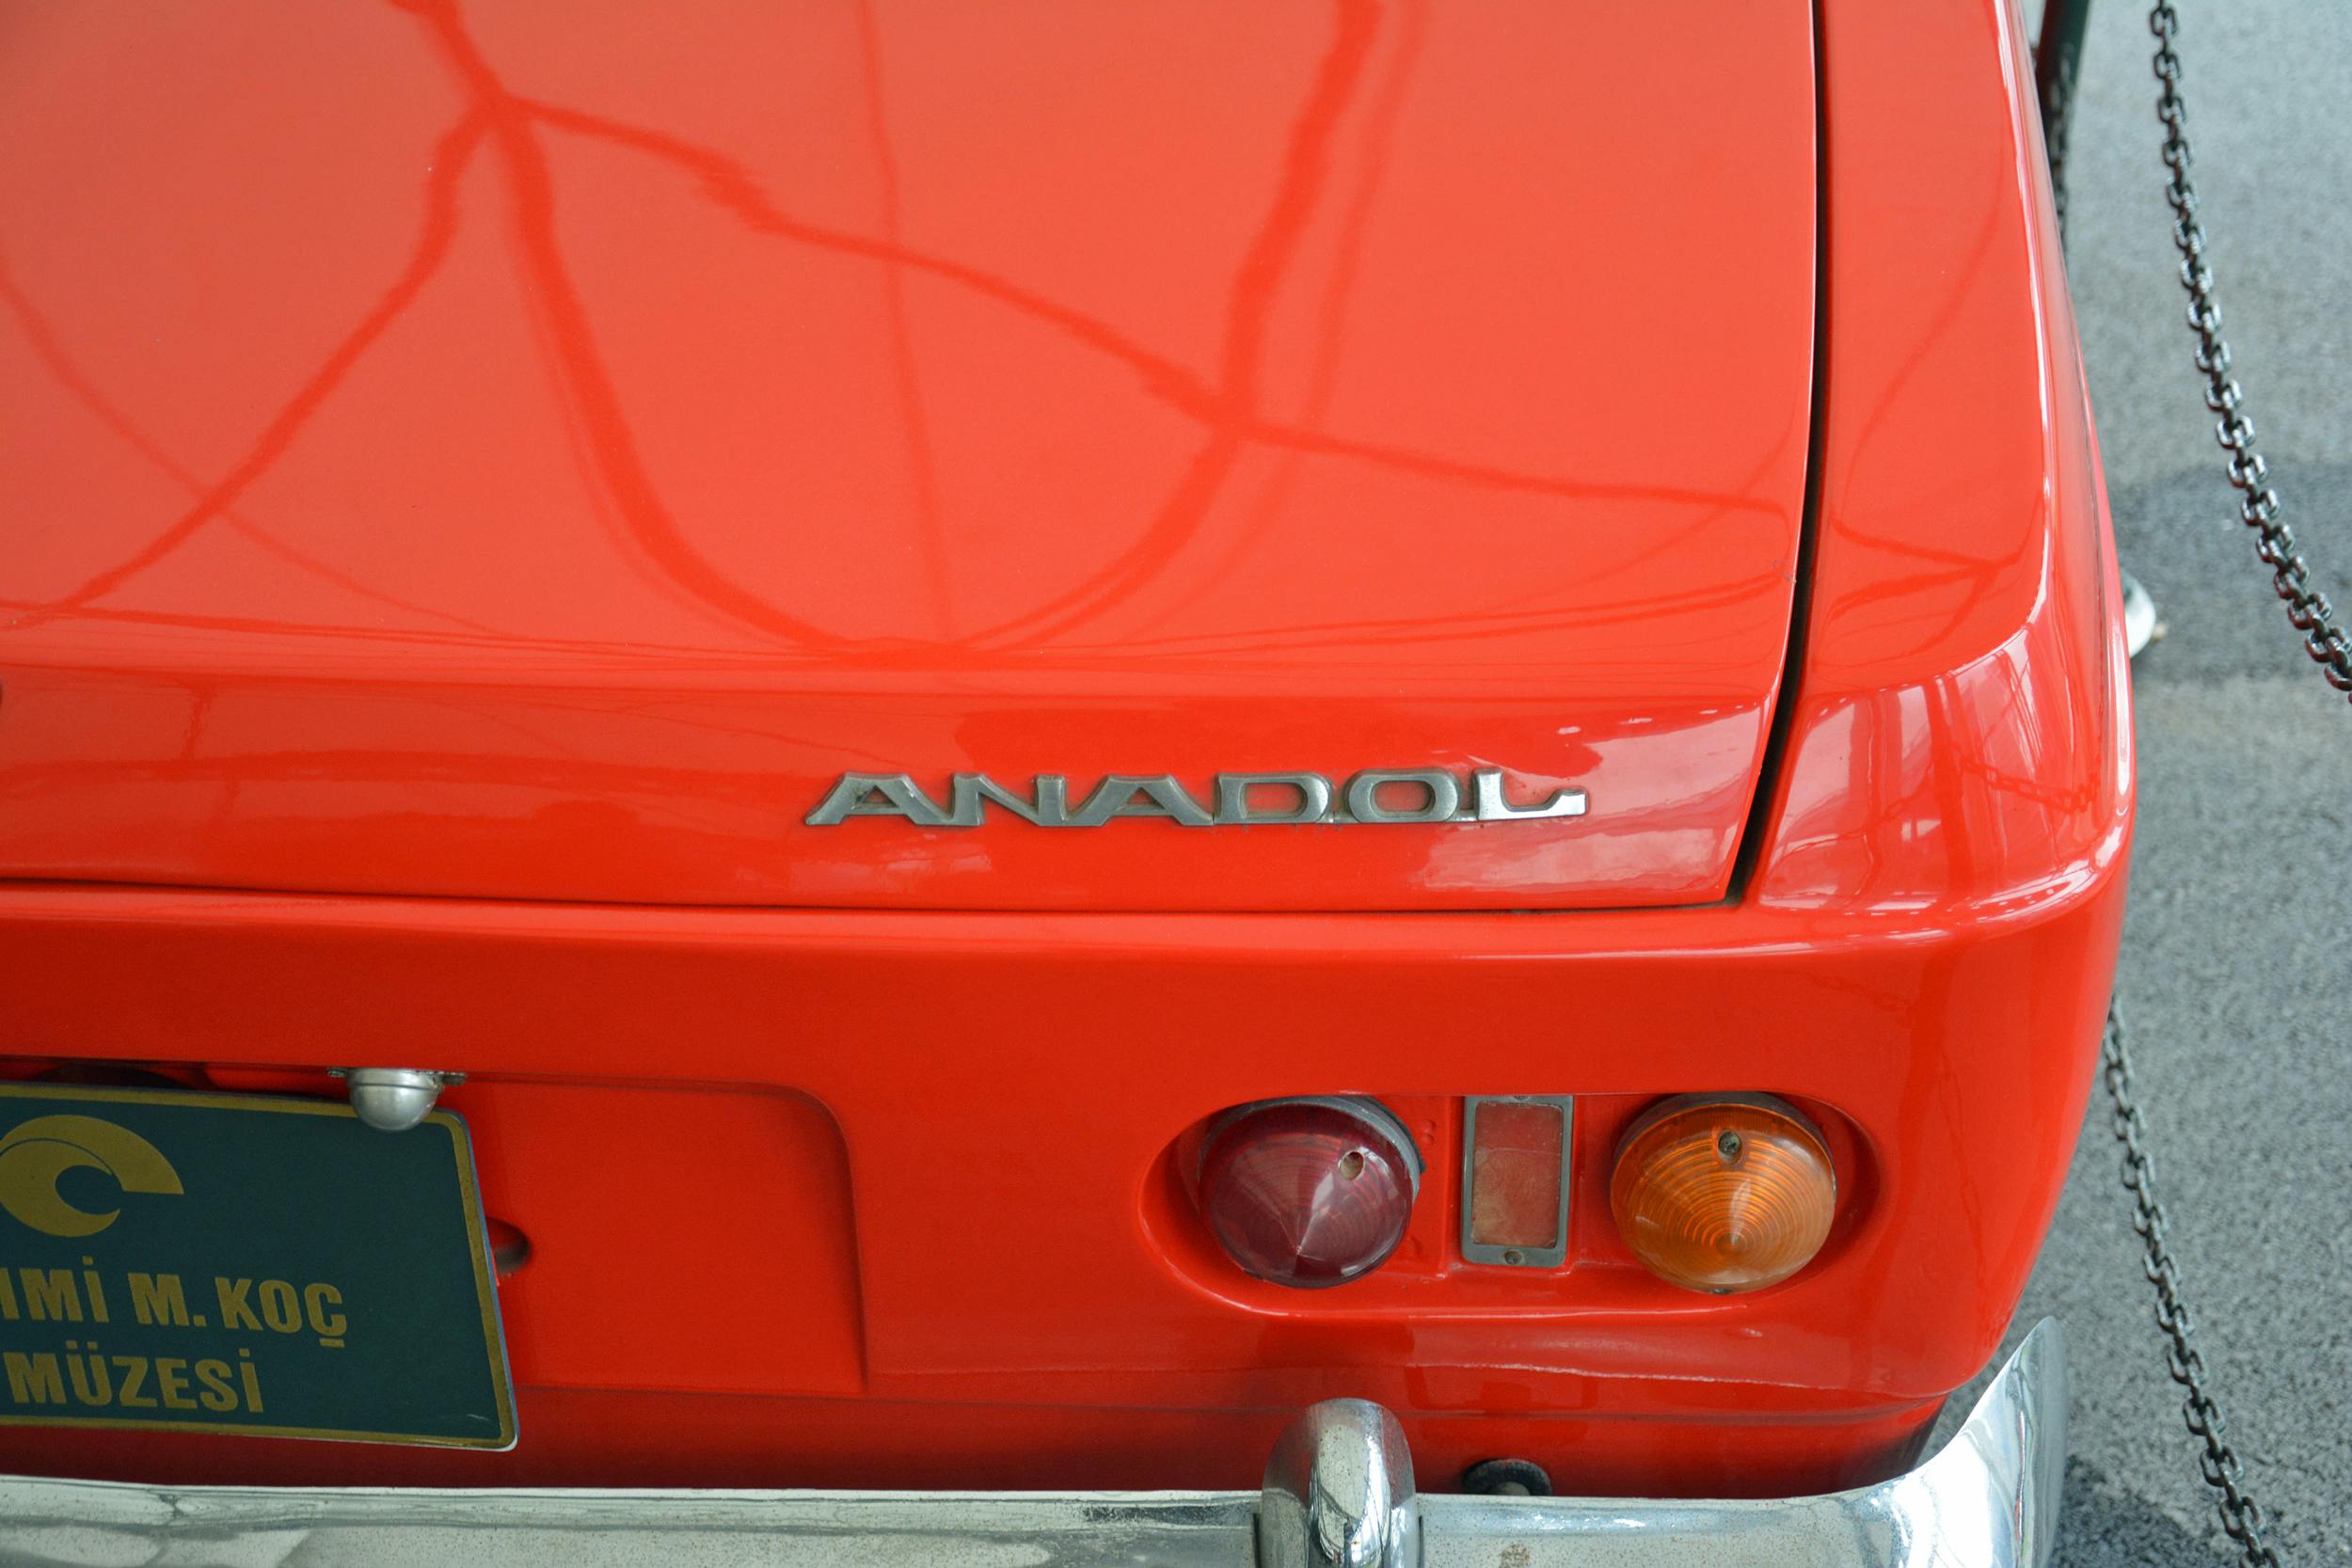 Anadol A1 rear badge lettering